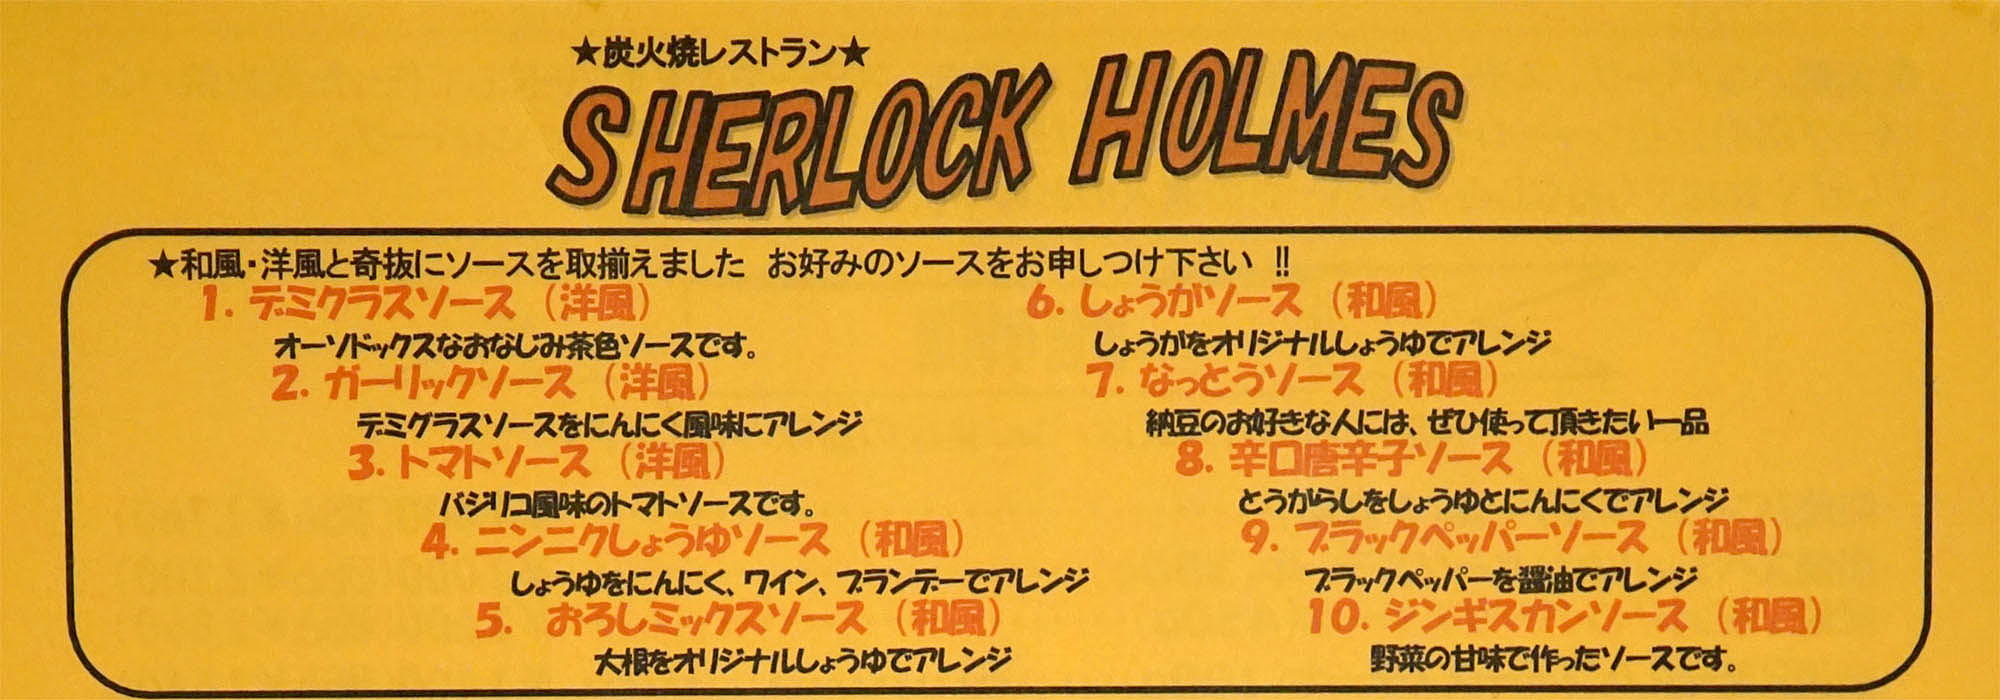 『SHERLOCK HOLMES』ソースメニュー